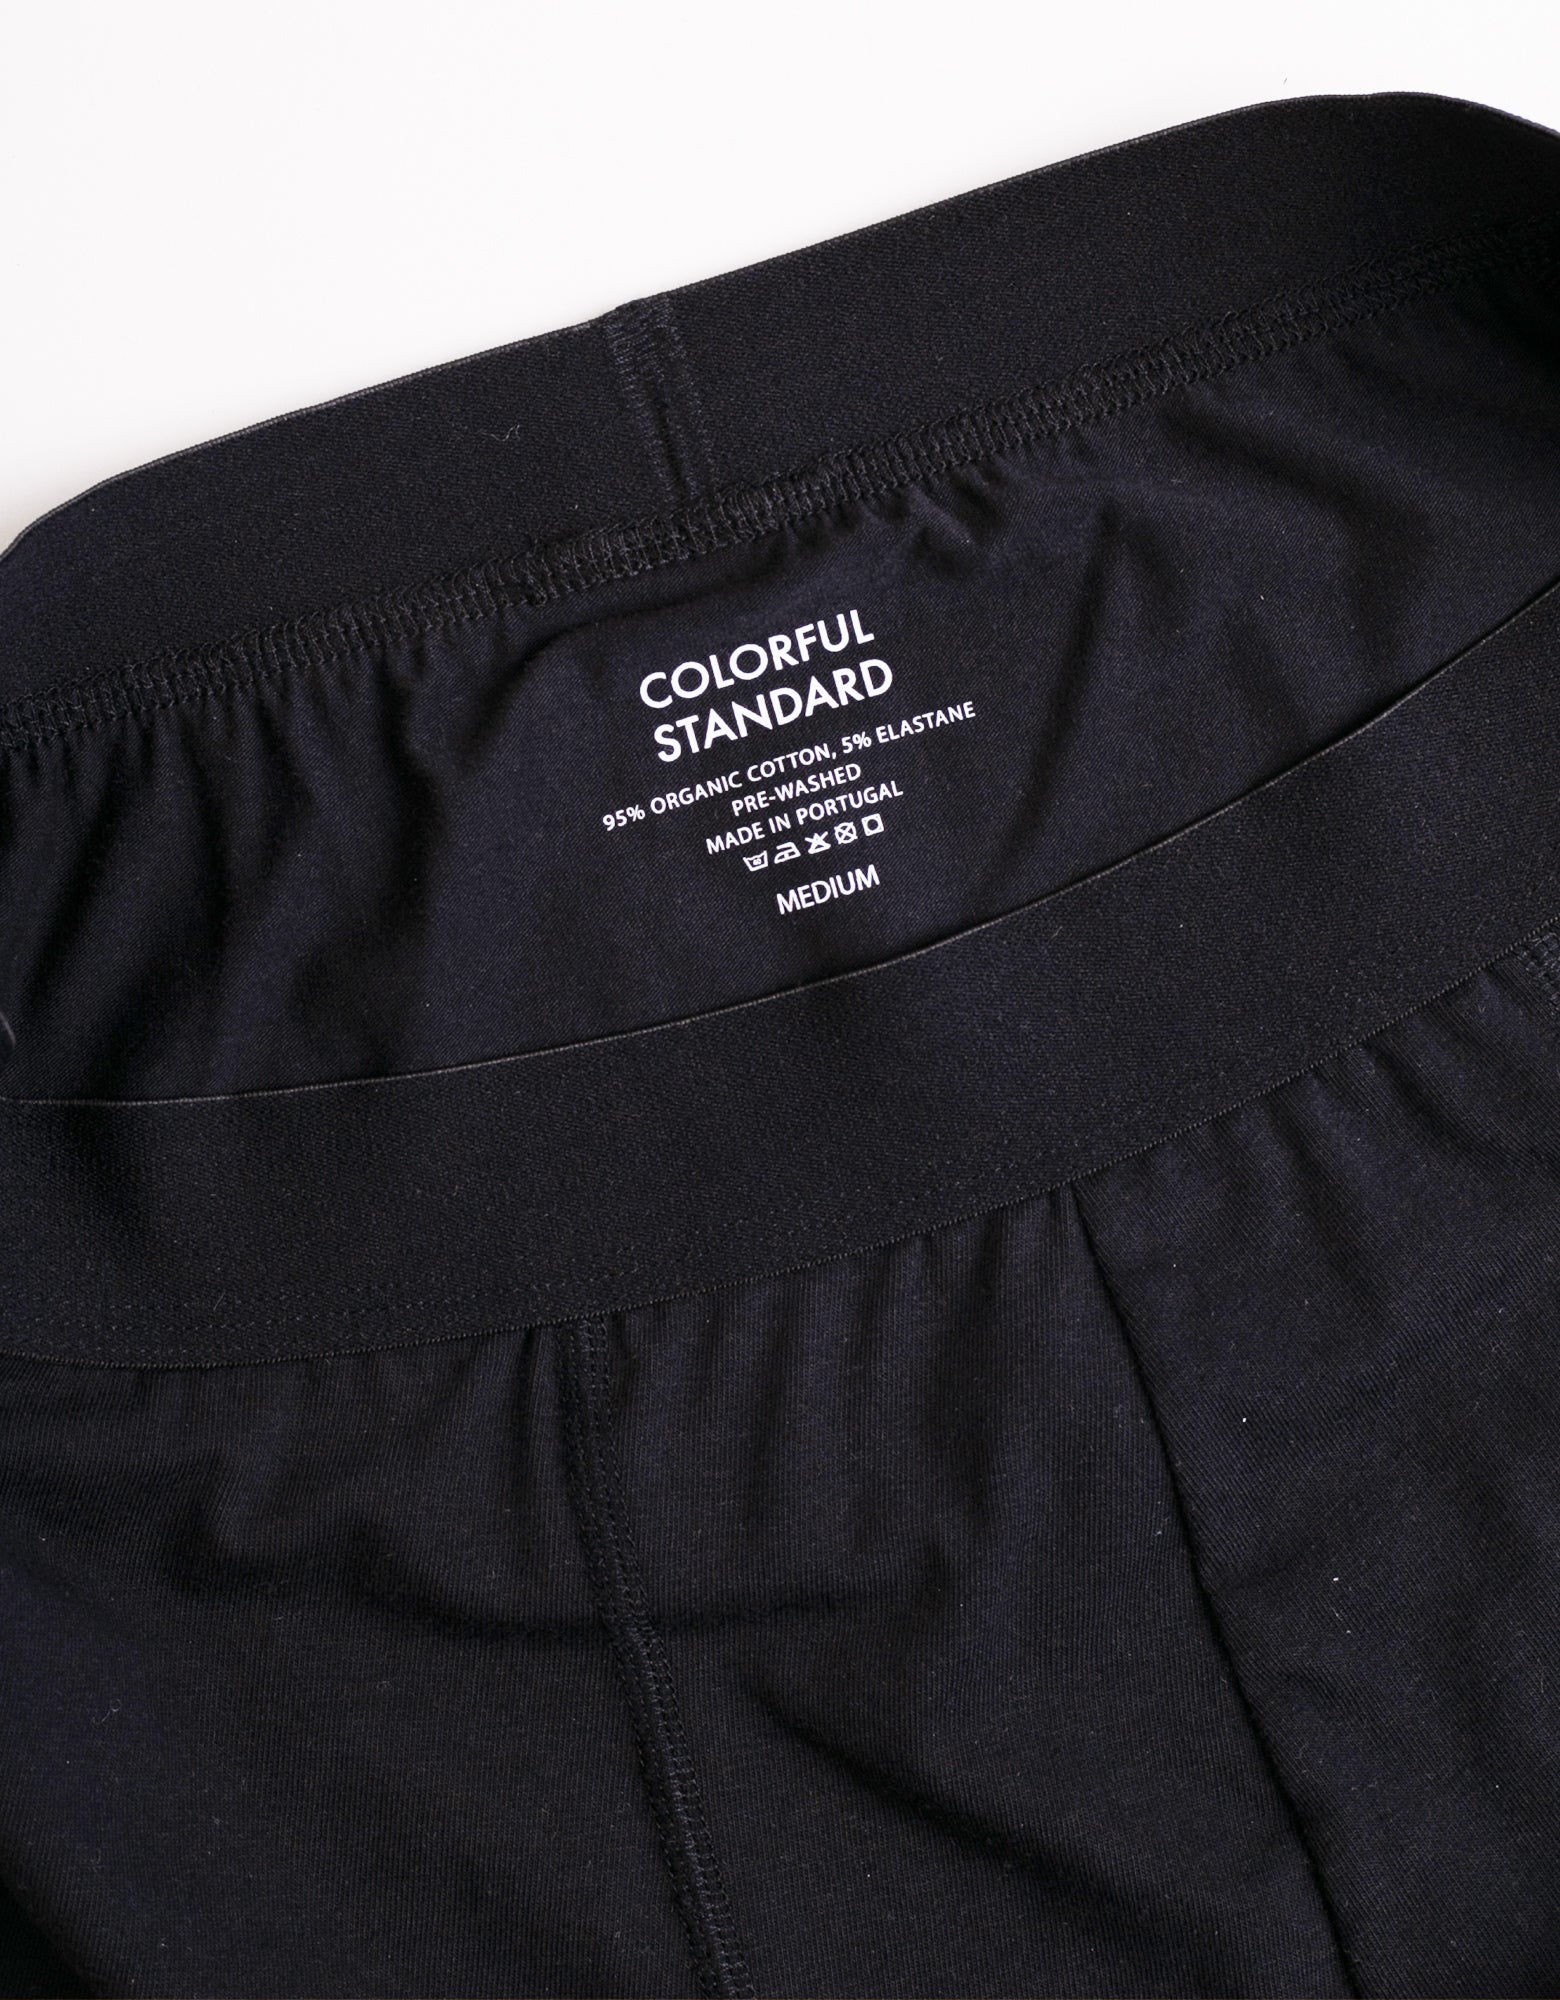 Colorful Standard Classic Organic Boxer Briefs Underwear Deep Black